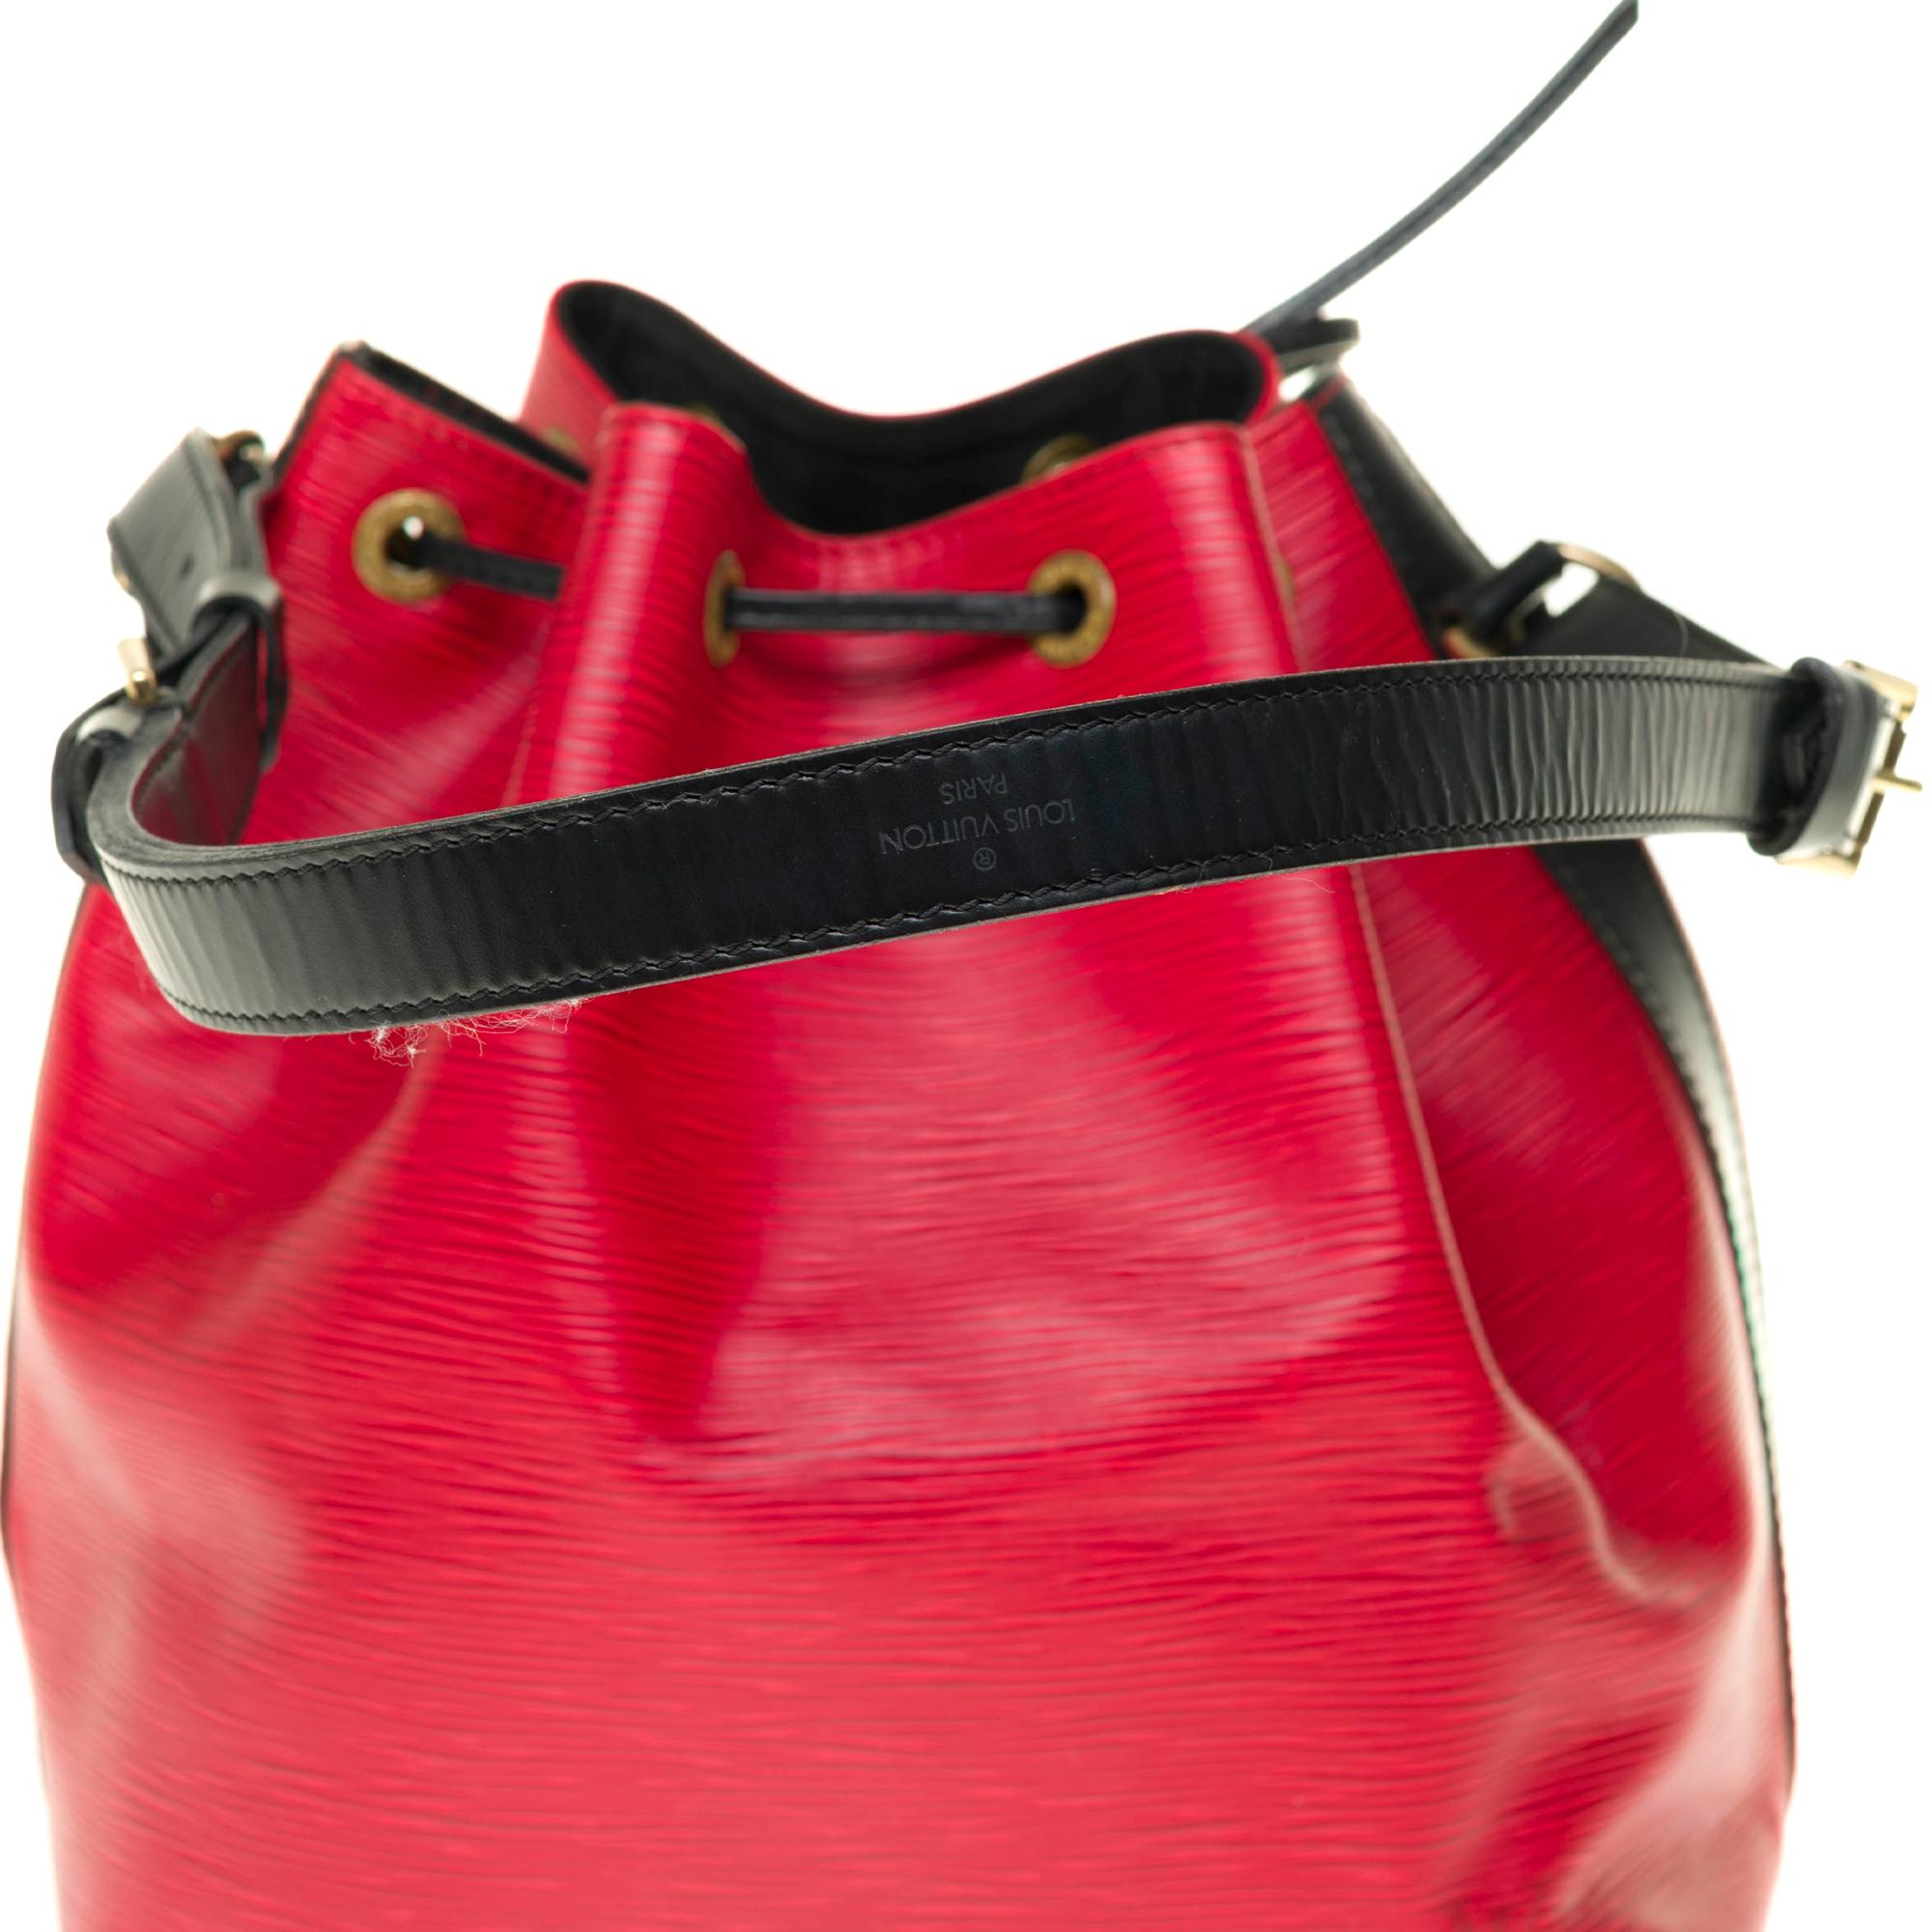 Women's Louis Vuitton Noé PM shoulder bag in red & black epi leather, gold hardware